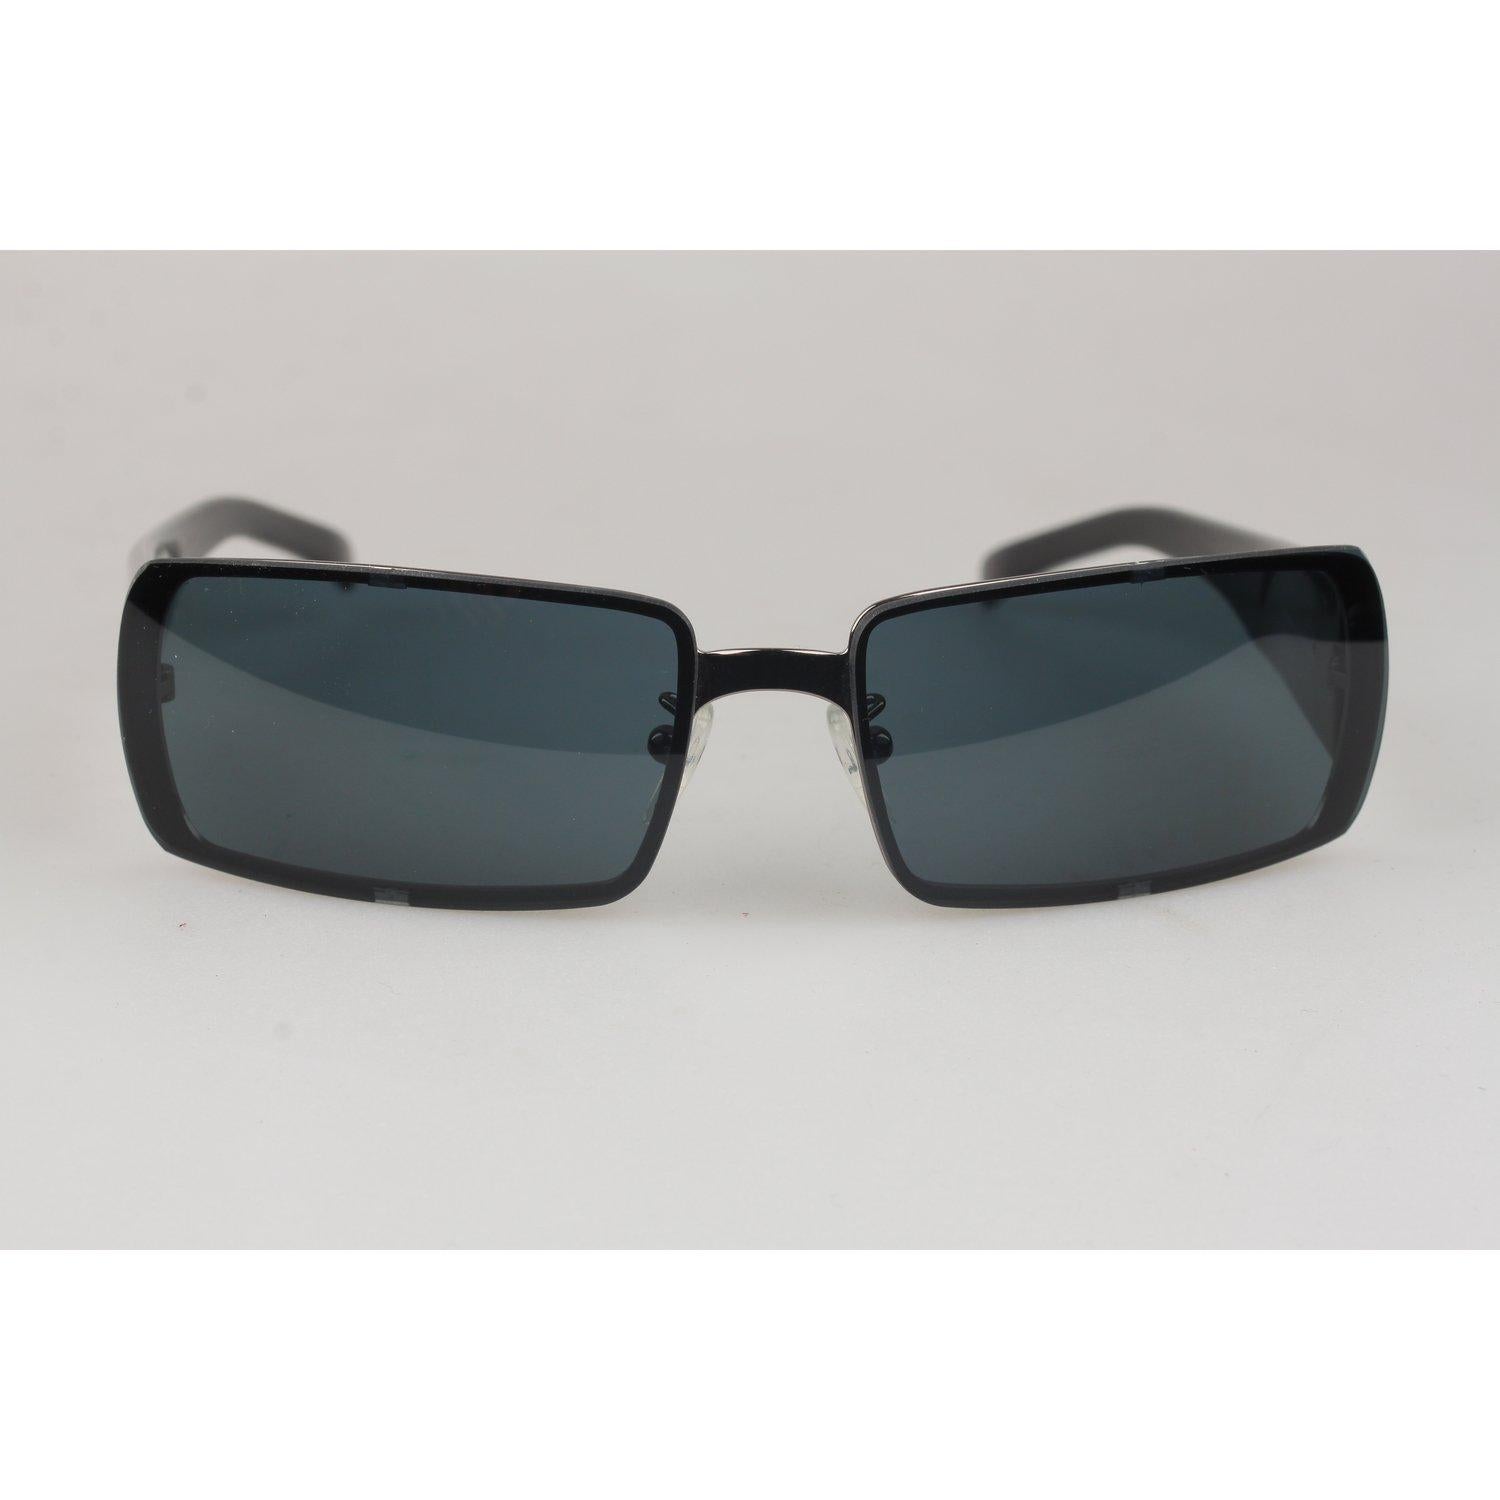 Fendi Unisex Sunglasses Mod. SL7460 Col. 568 62mm 4